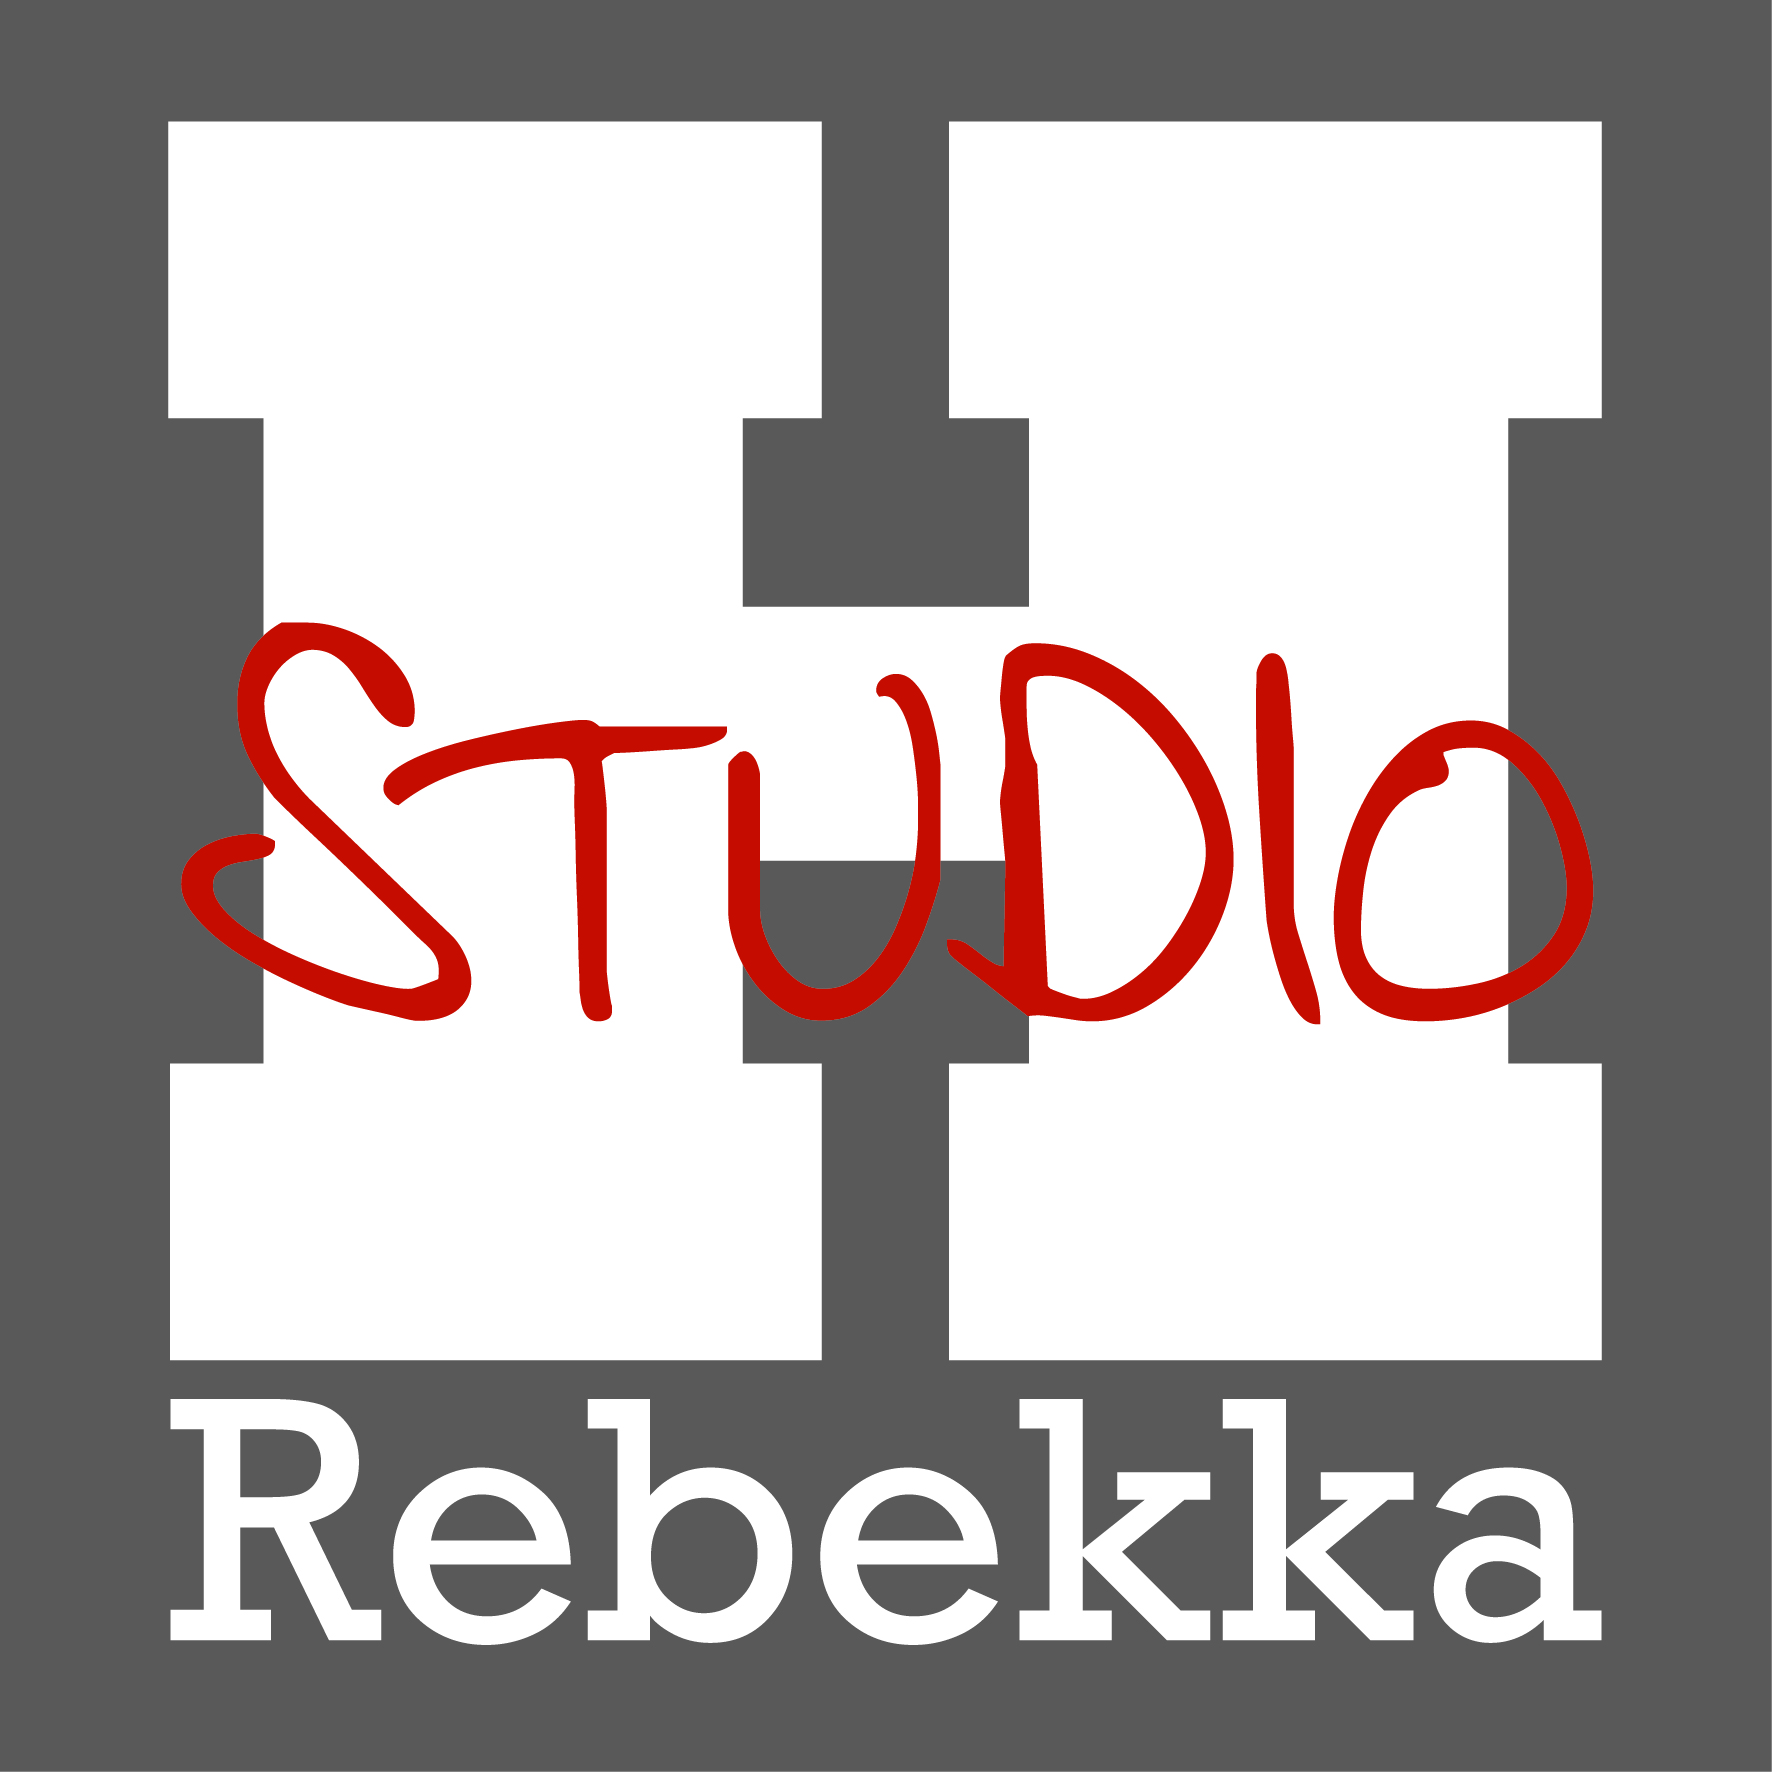 H-Studio Rebekka